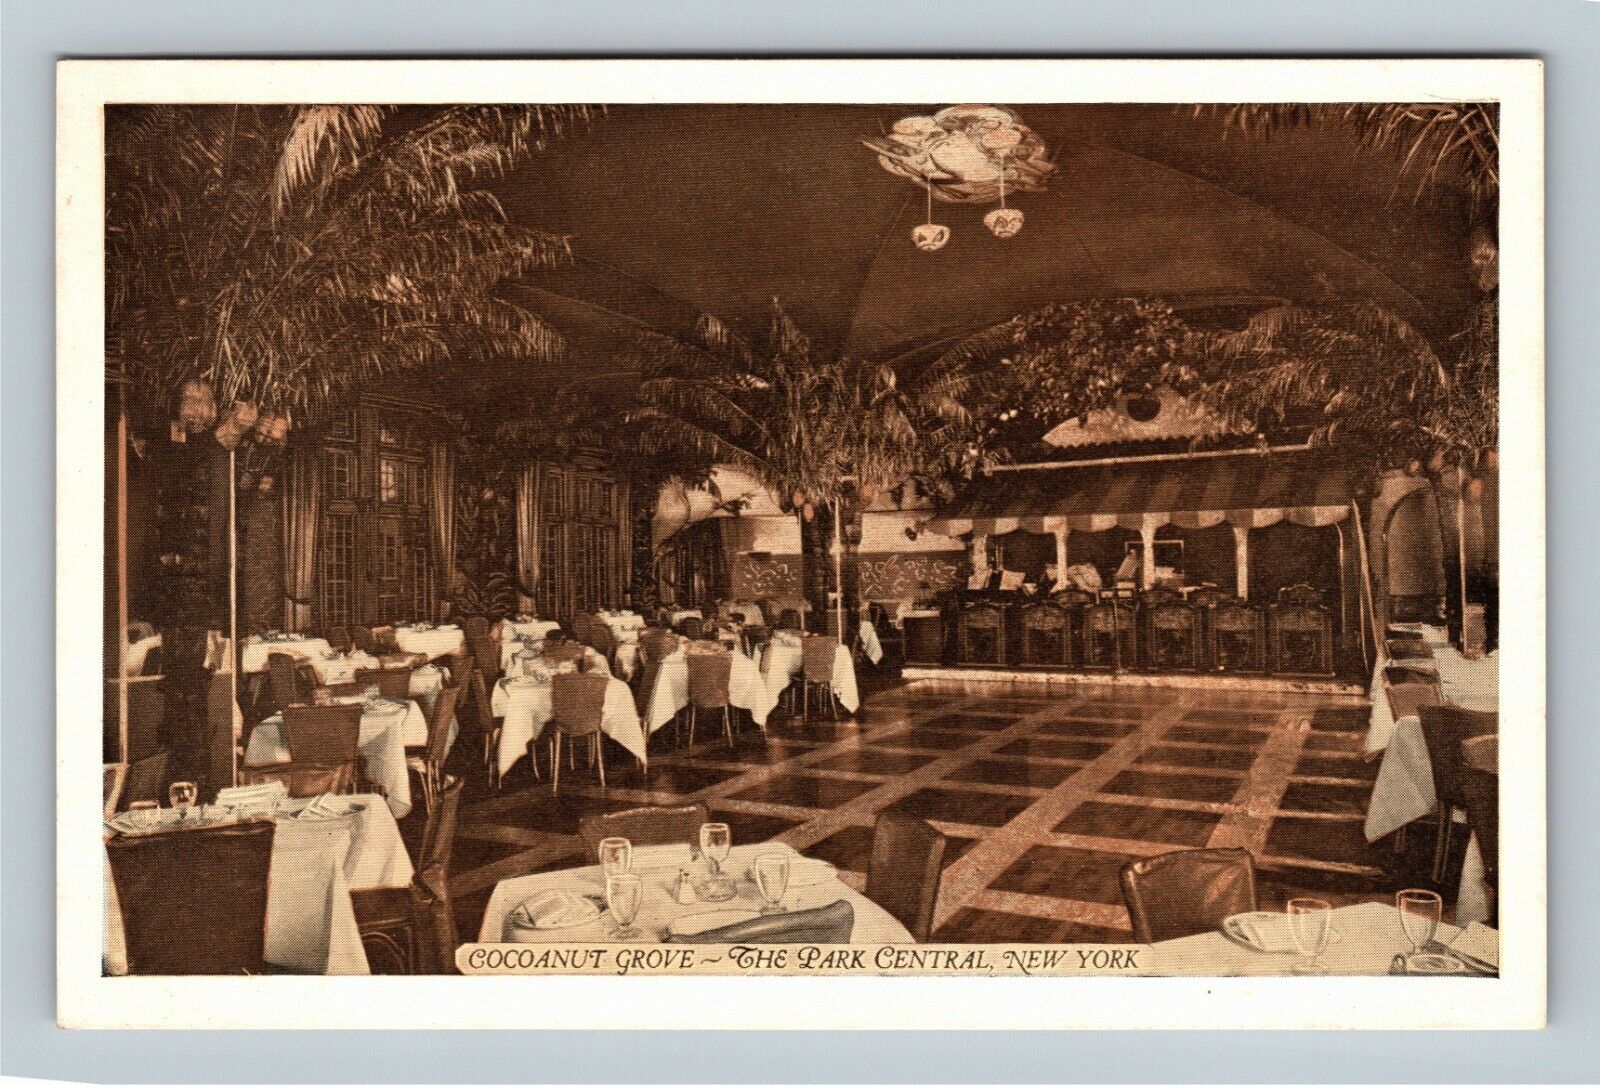 Famous Coconut Grove Dining, Dancing, Antique Vintage New York City Postcard